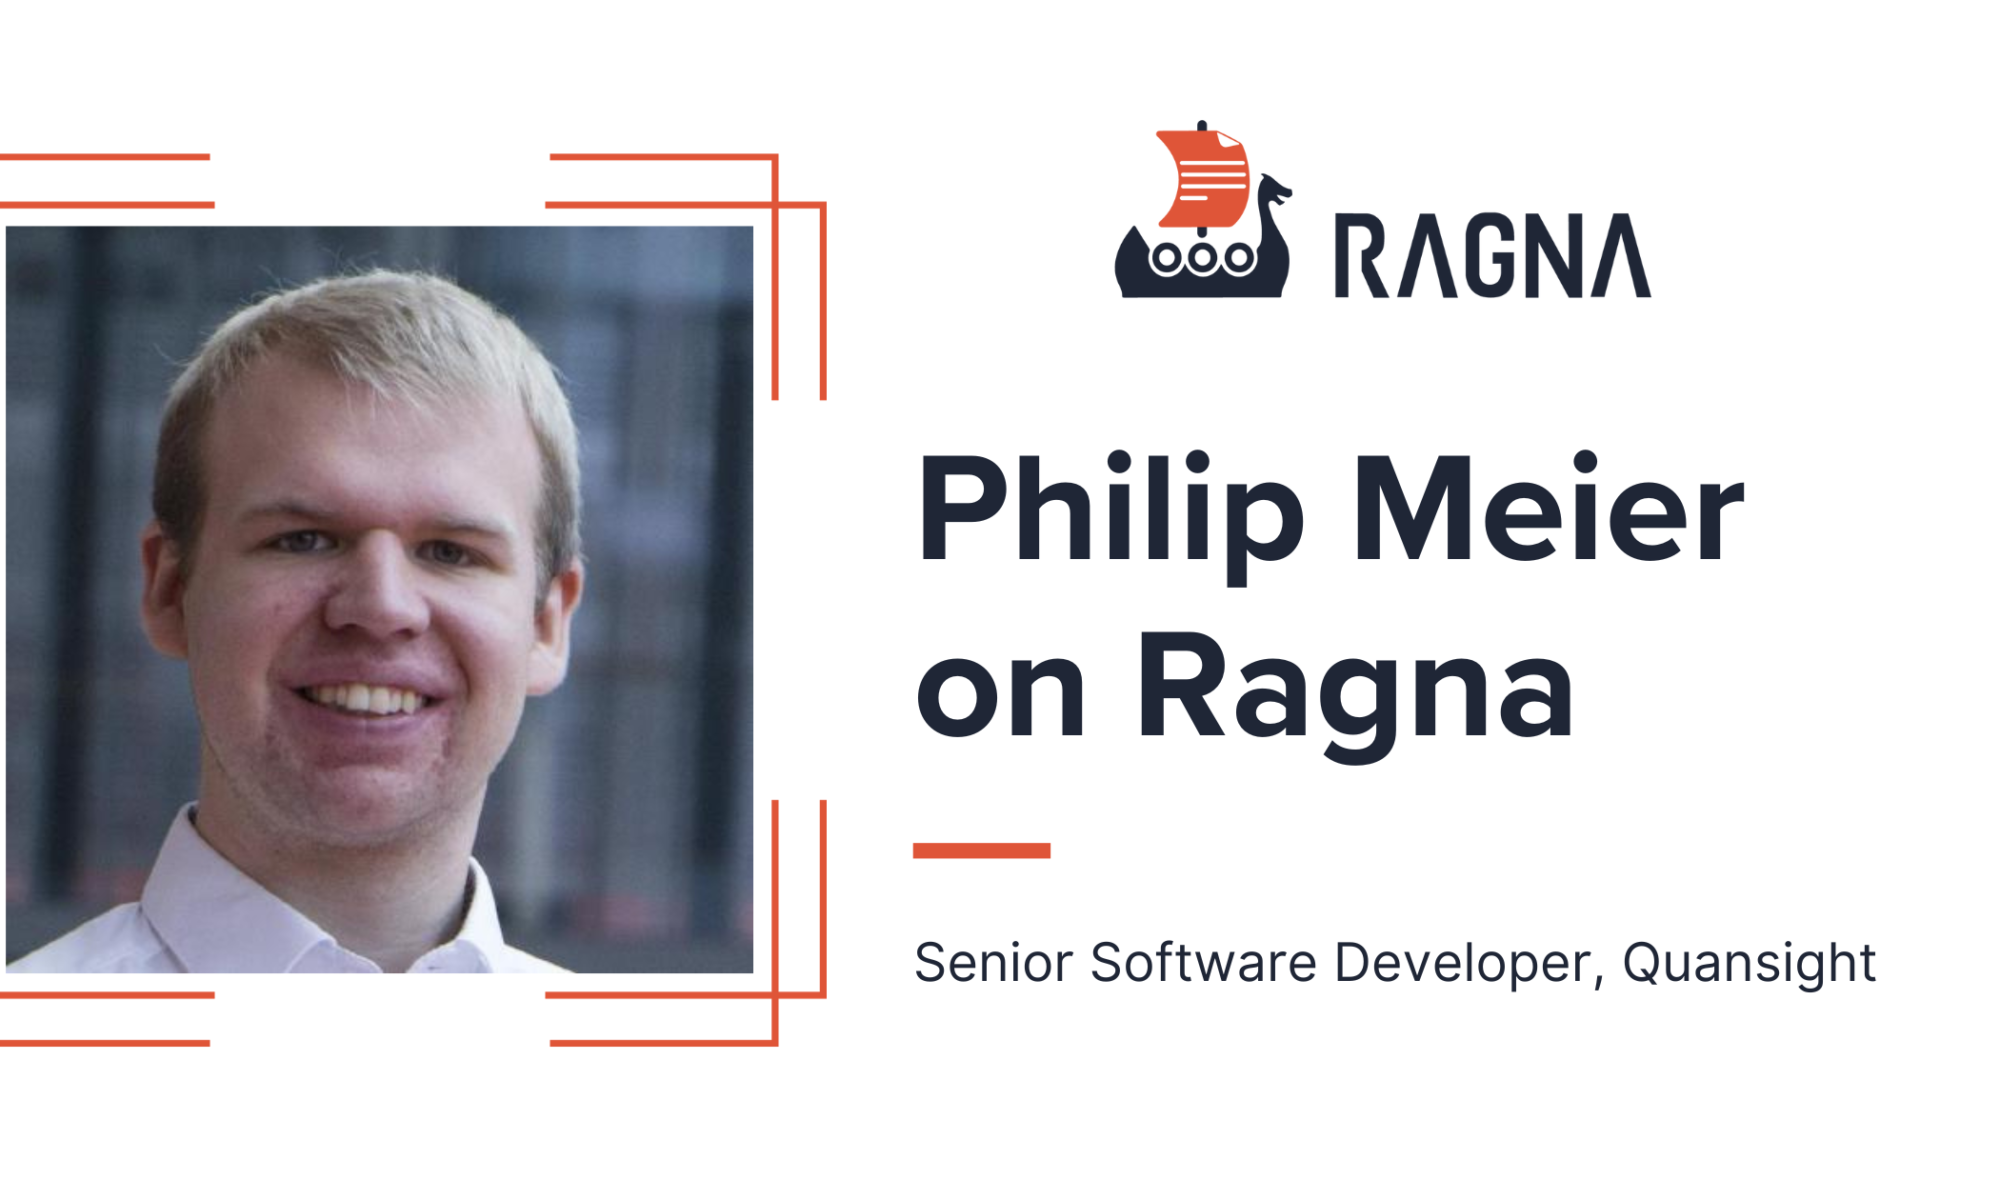 Image of Philip Meier, a core developer of Ragna